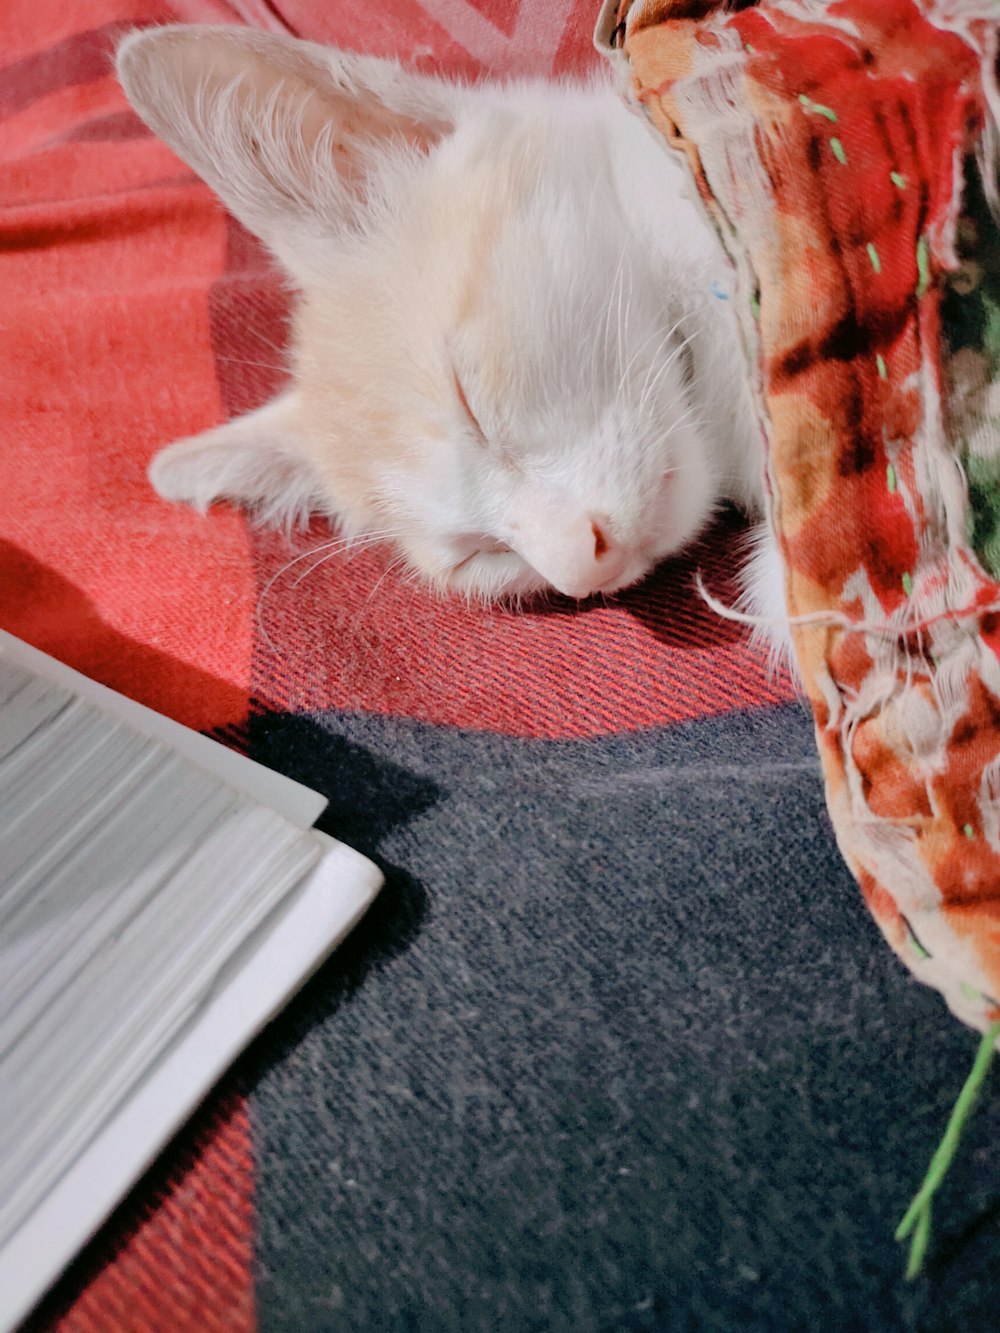 a cat sleeping on a carpet